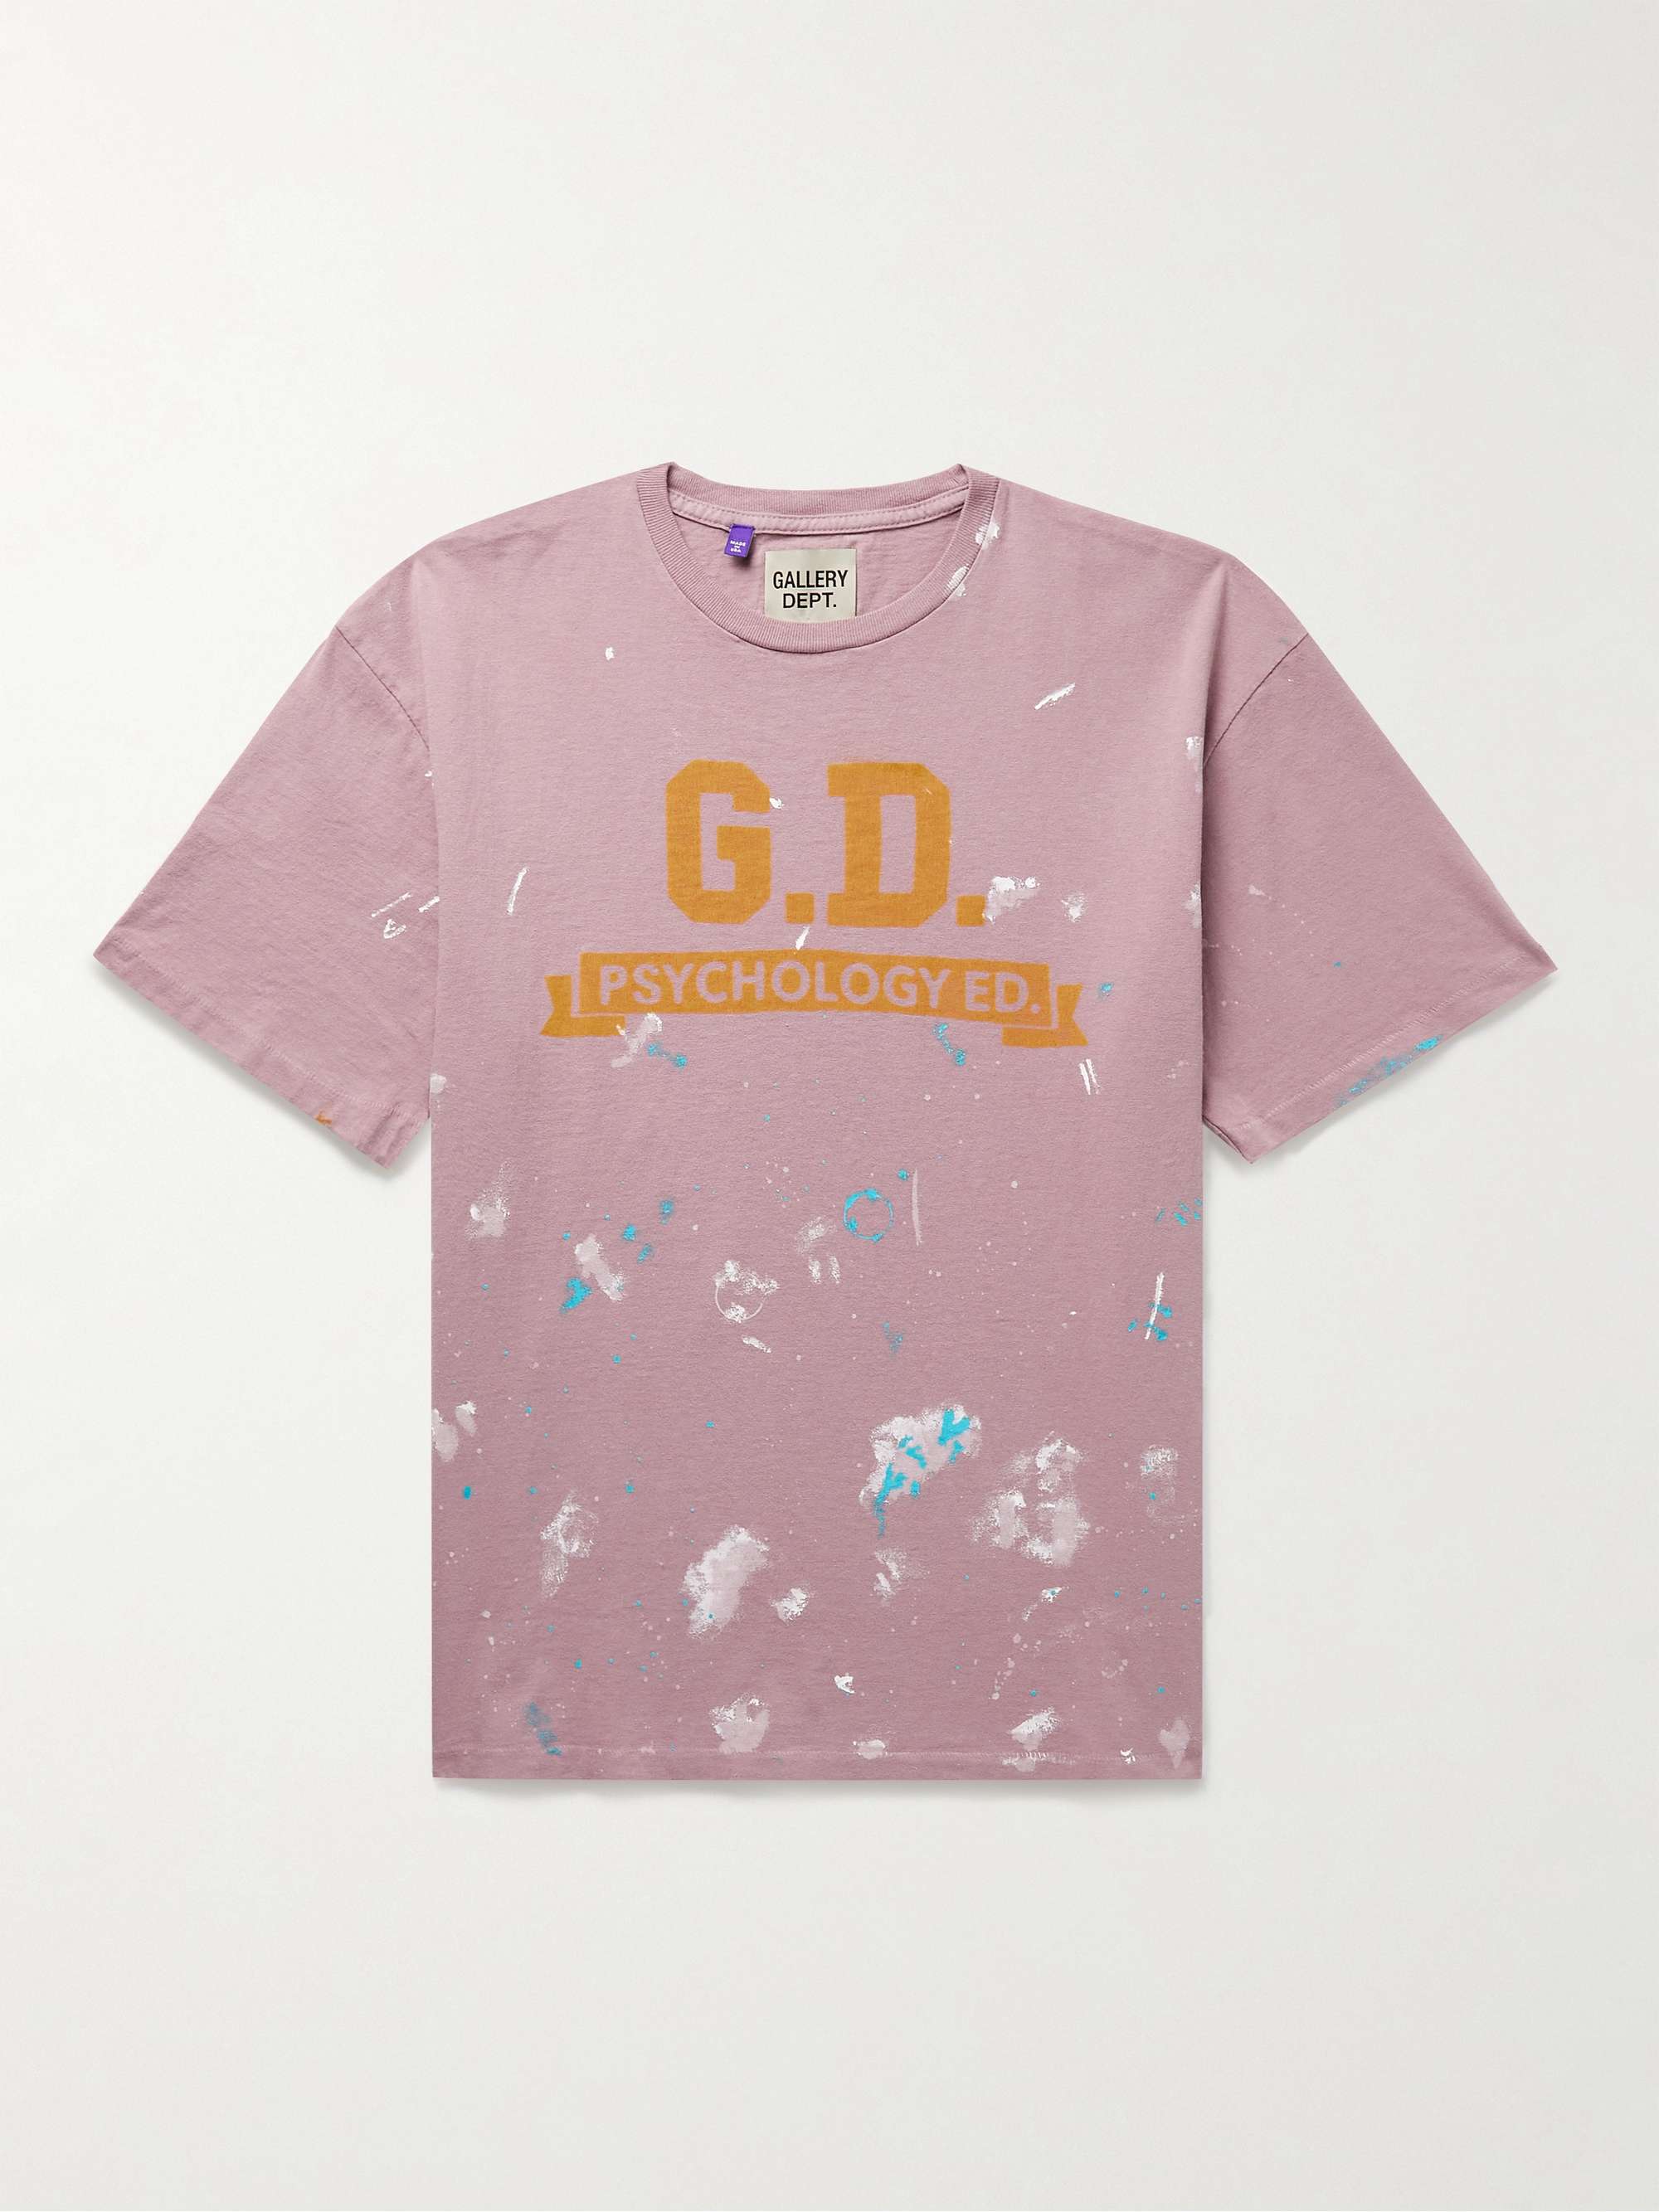 GALLERY DEPT. Psychology Ed Paint-Splattered Printed Cotton-Jersey T-Shirt